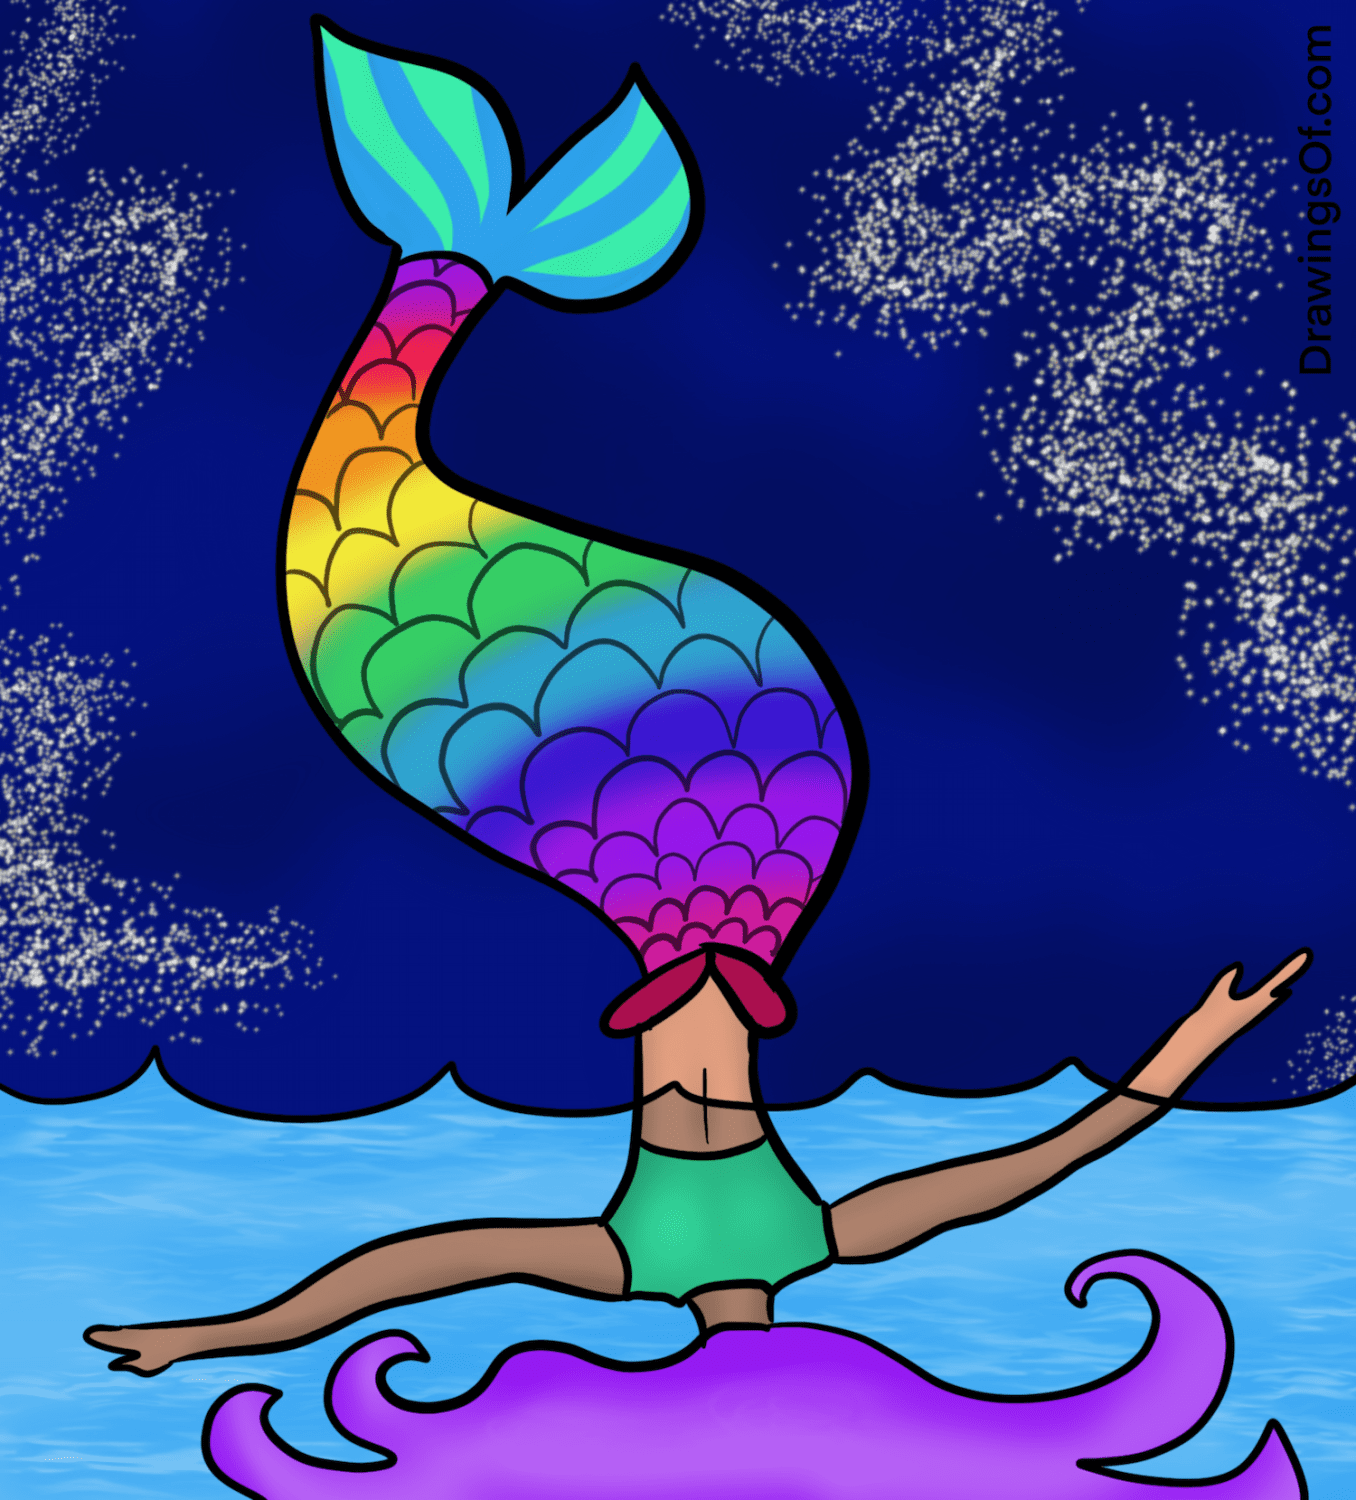 Mermaid tail drawing